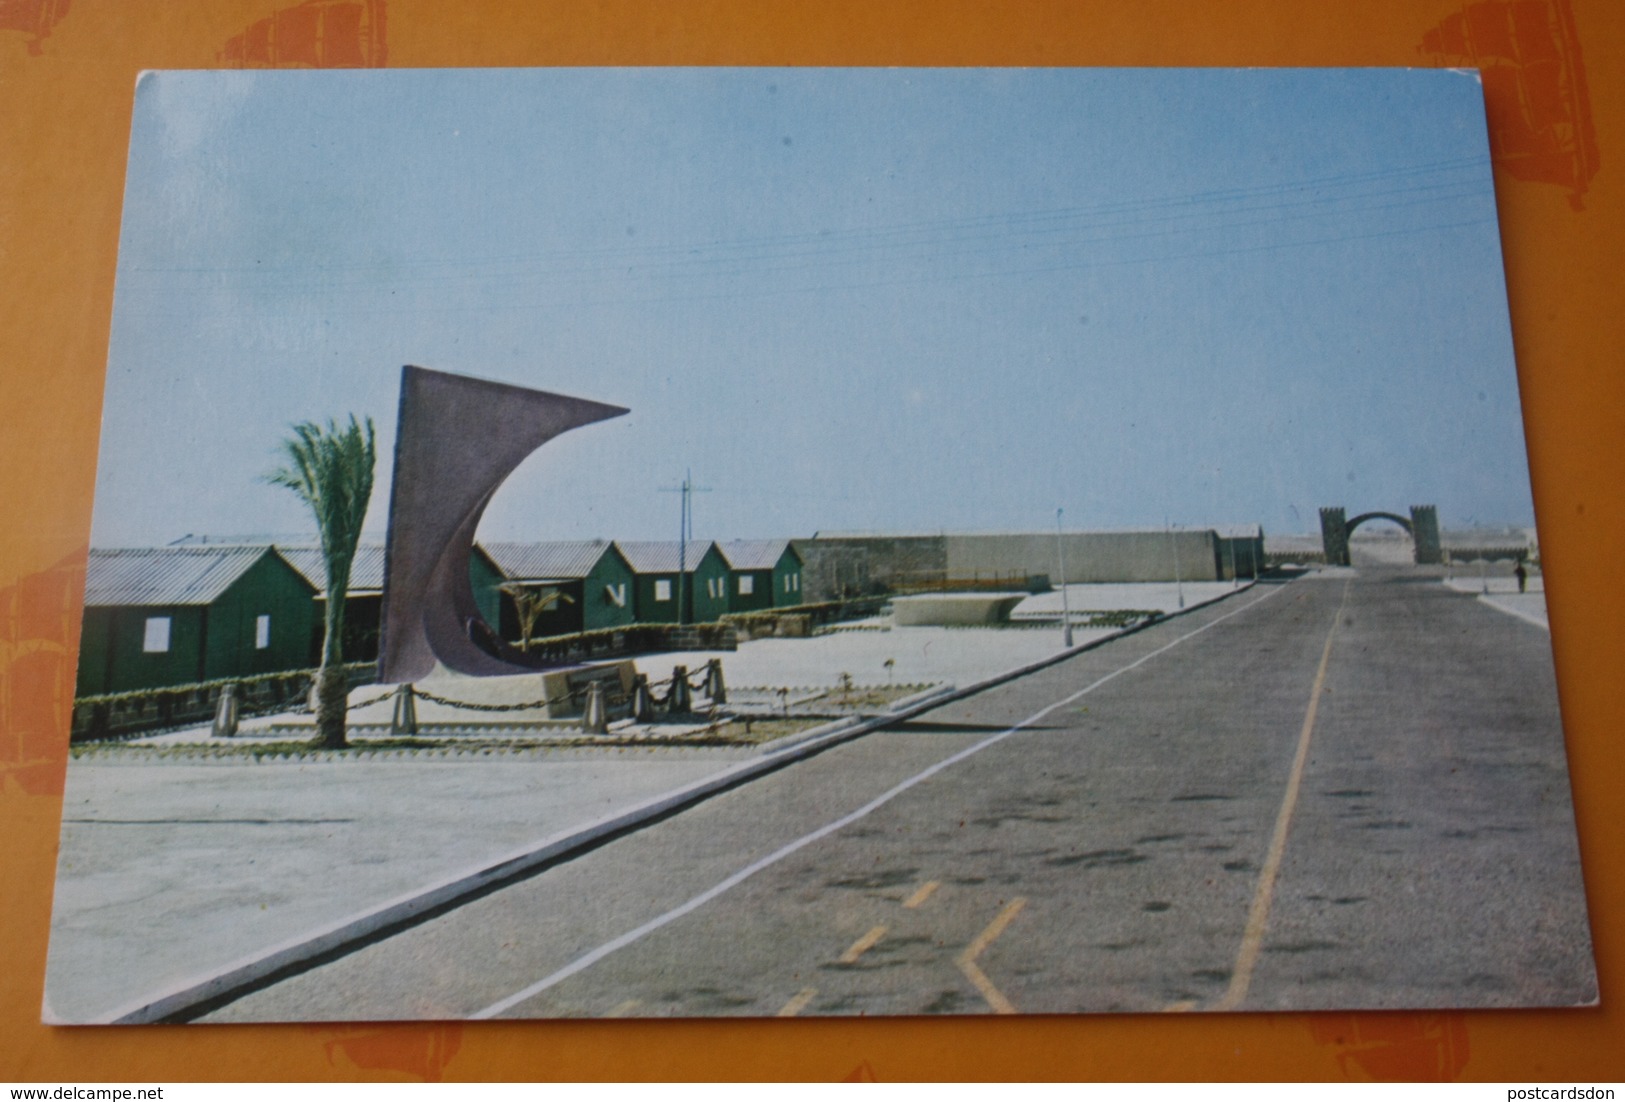 WESTERN SAHARA. AAIUN Sahara Espanol (A.O.E.)  1960s Army's Batallion Area - Western Sahara